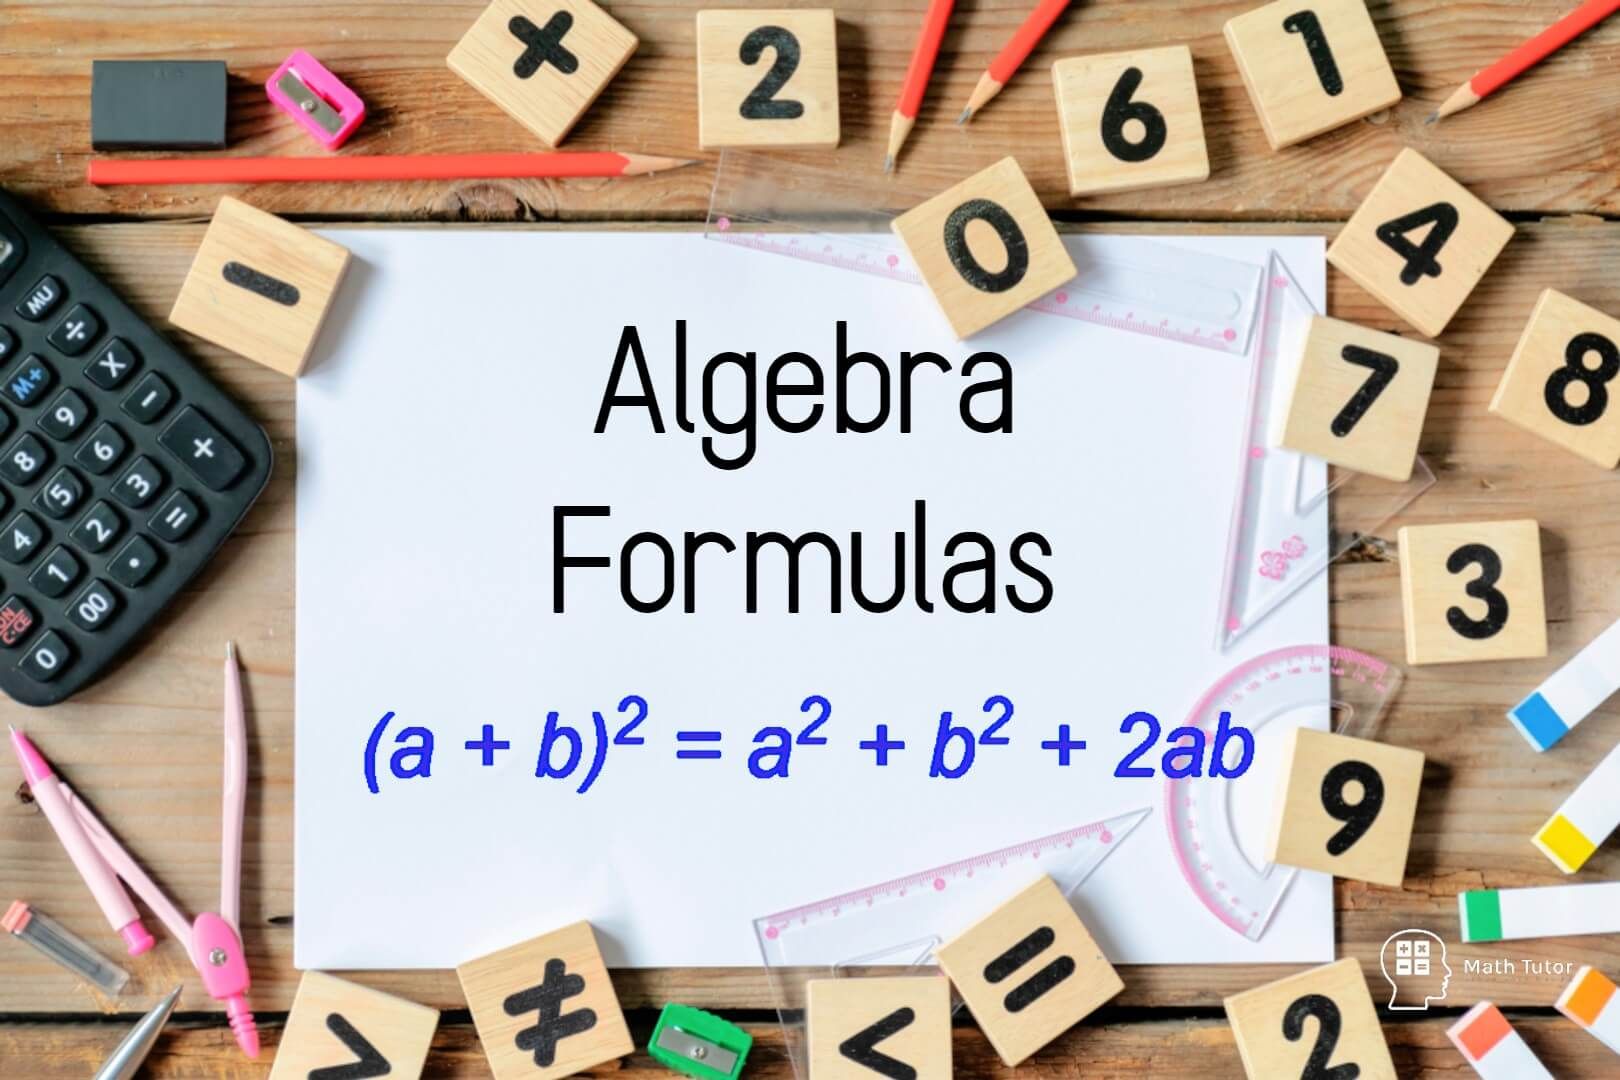 Algebra formulas